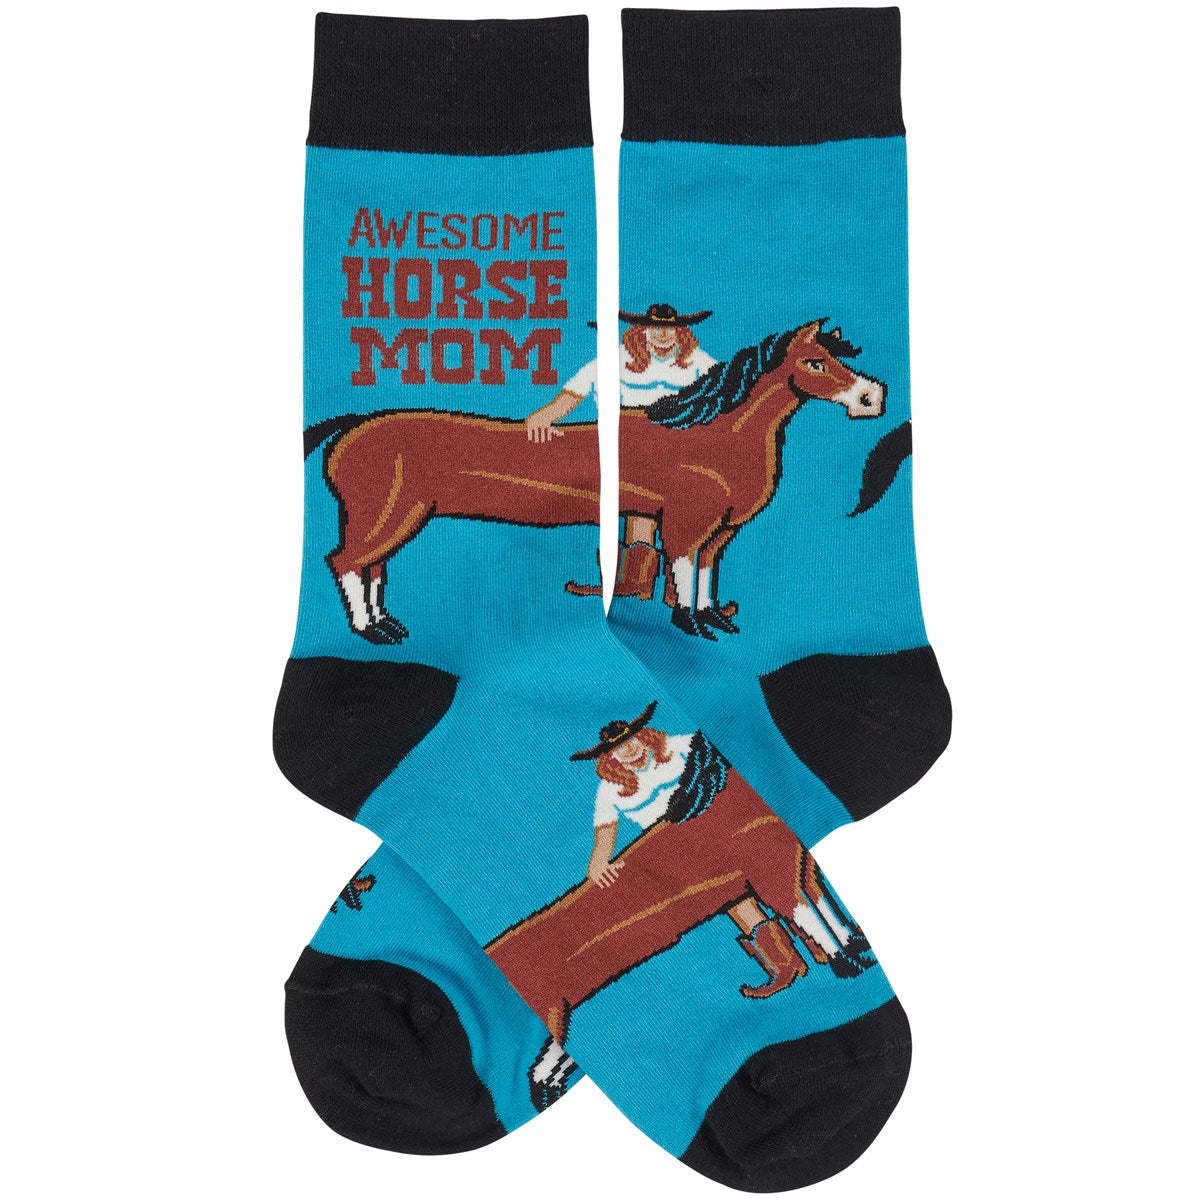 Awesome Horse Mom Fun Novelty Socks